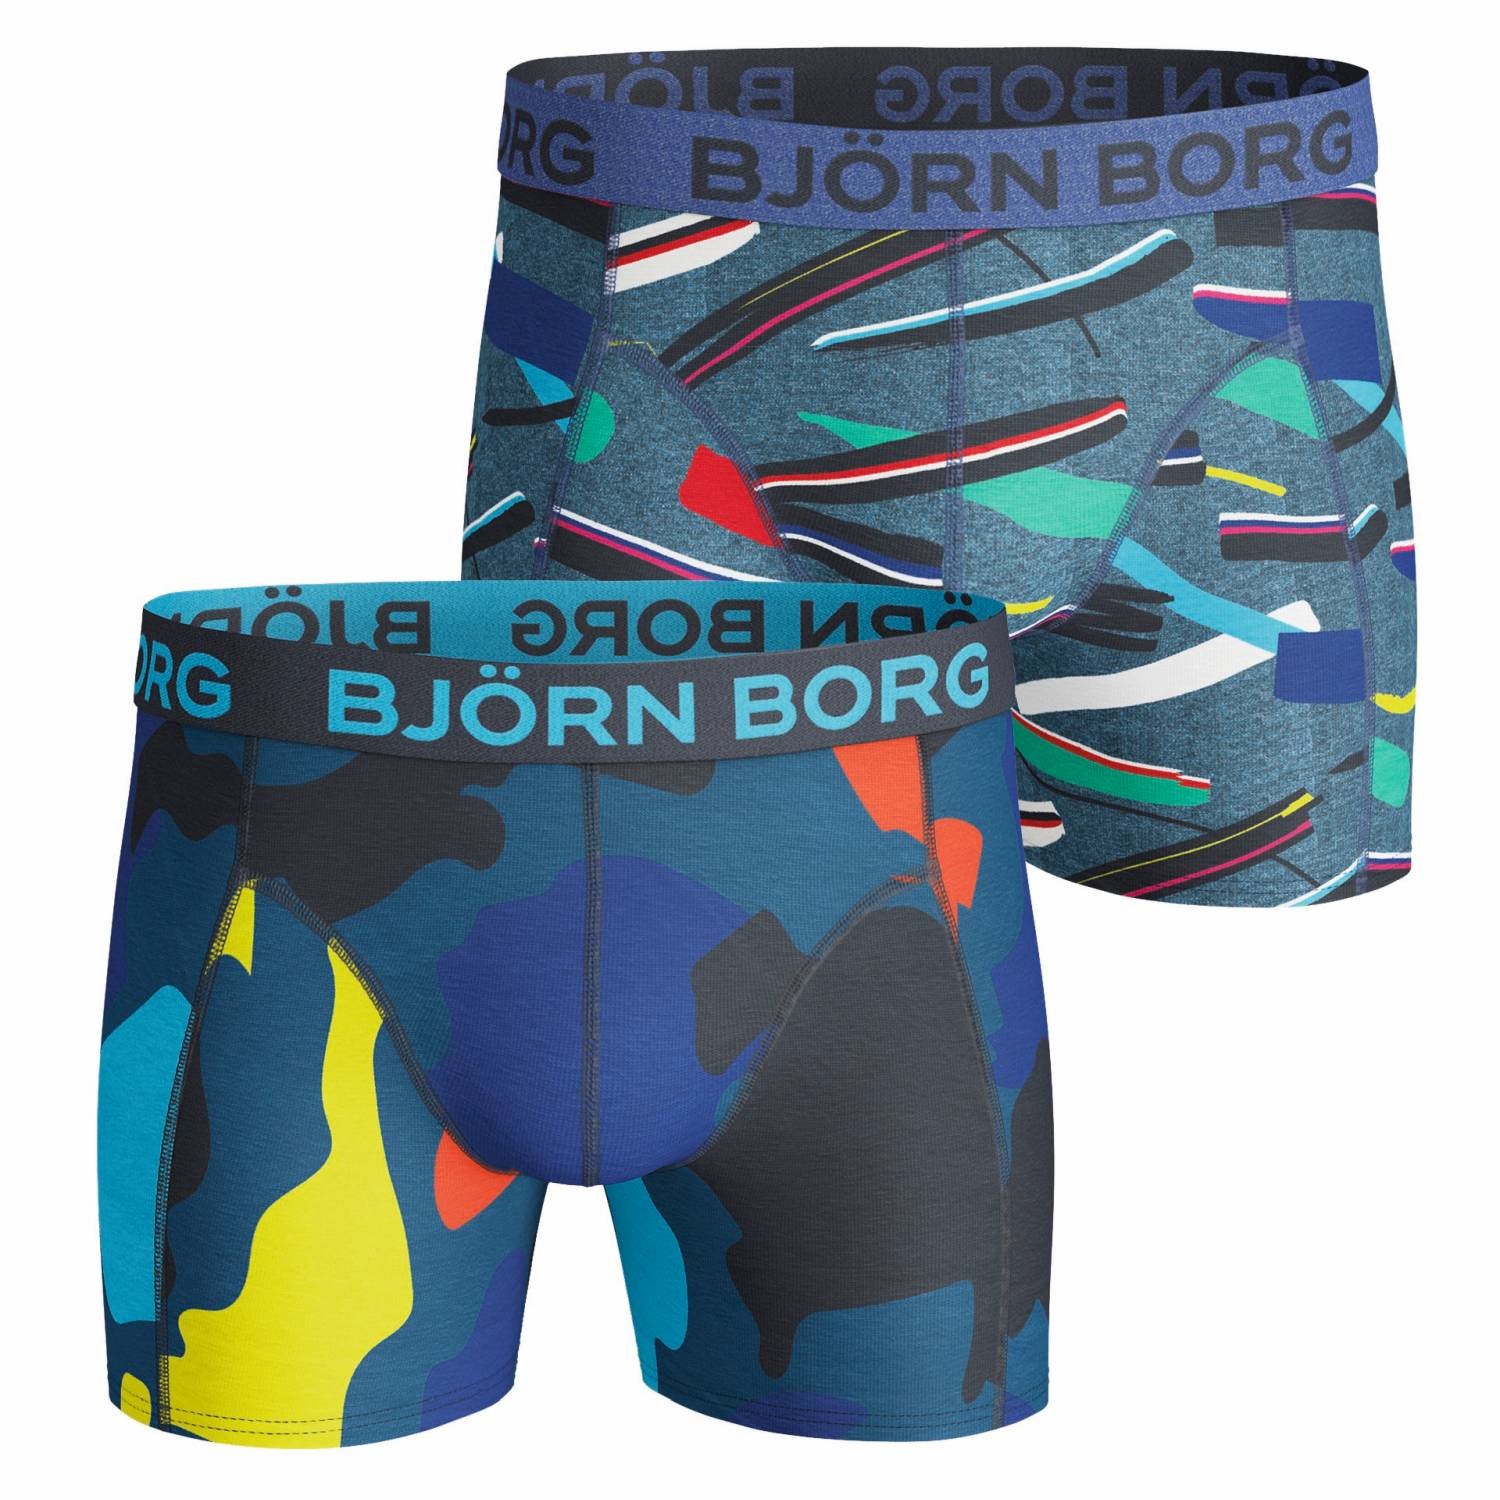 Björn Borg Blocks and Stroke Shorts